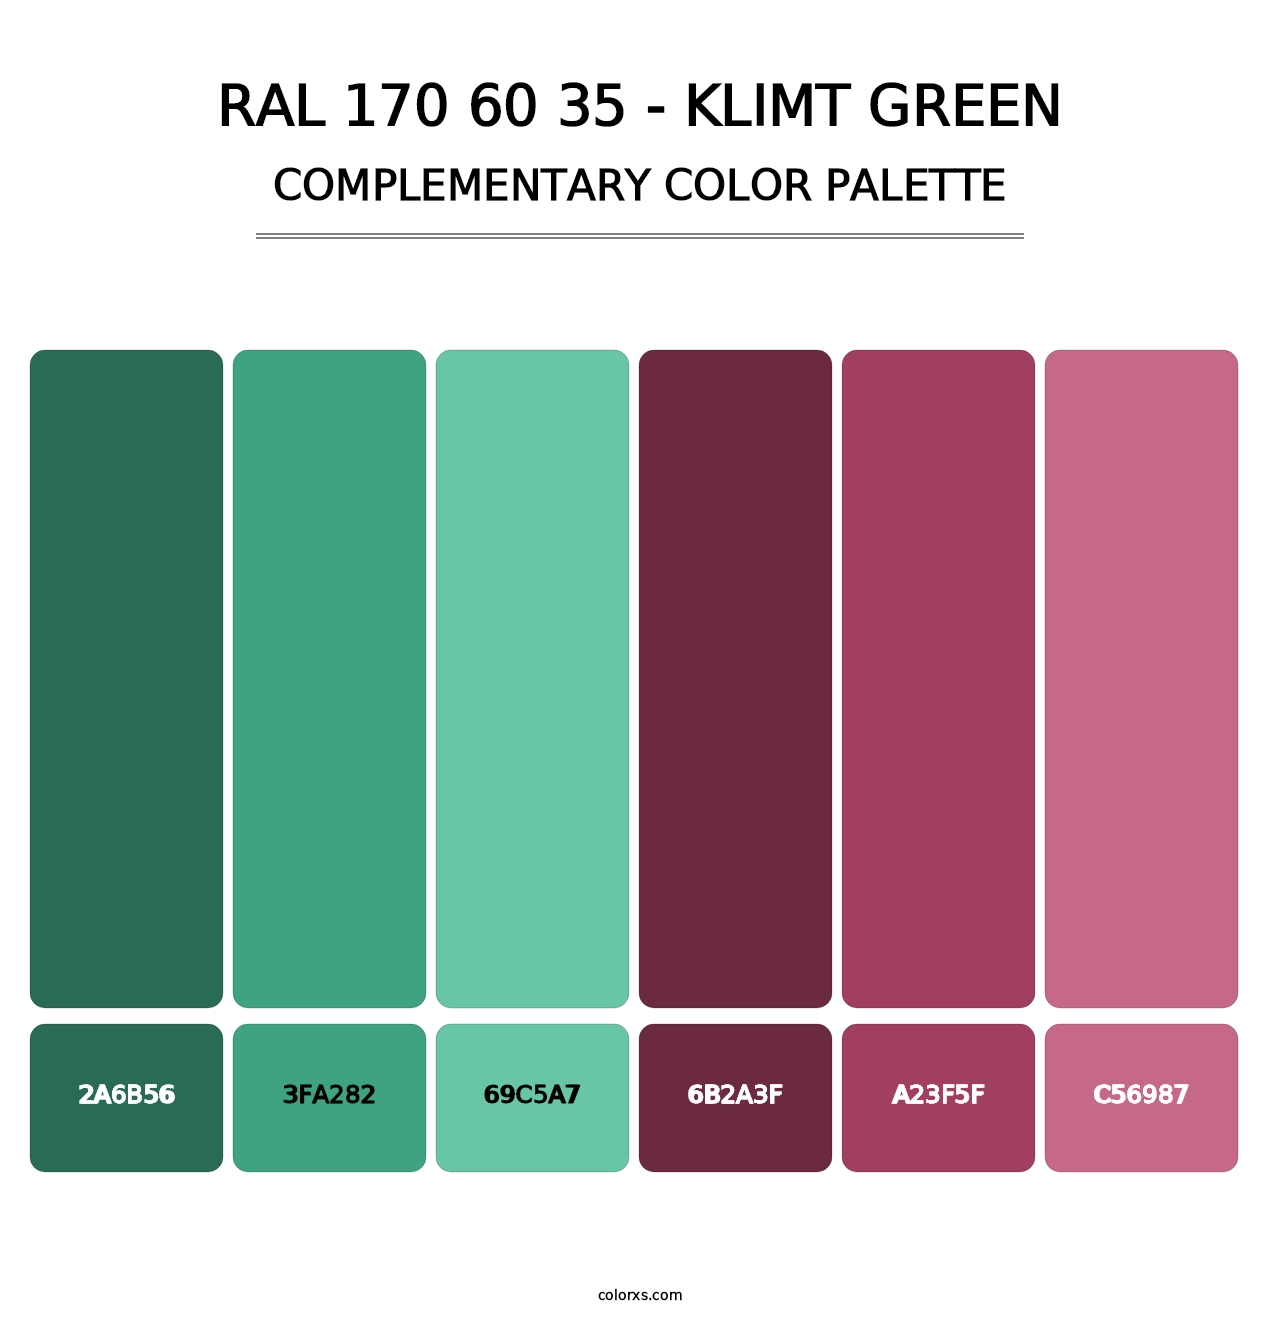 RAL 170 60 35 - Klimt Green - Complementary Color Palette